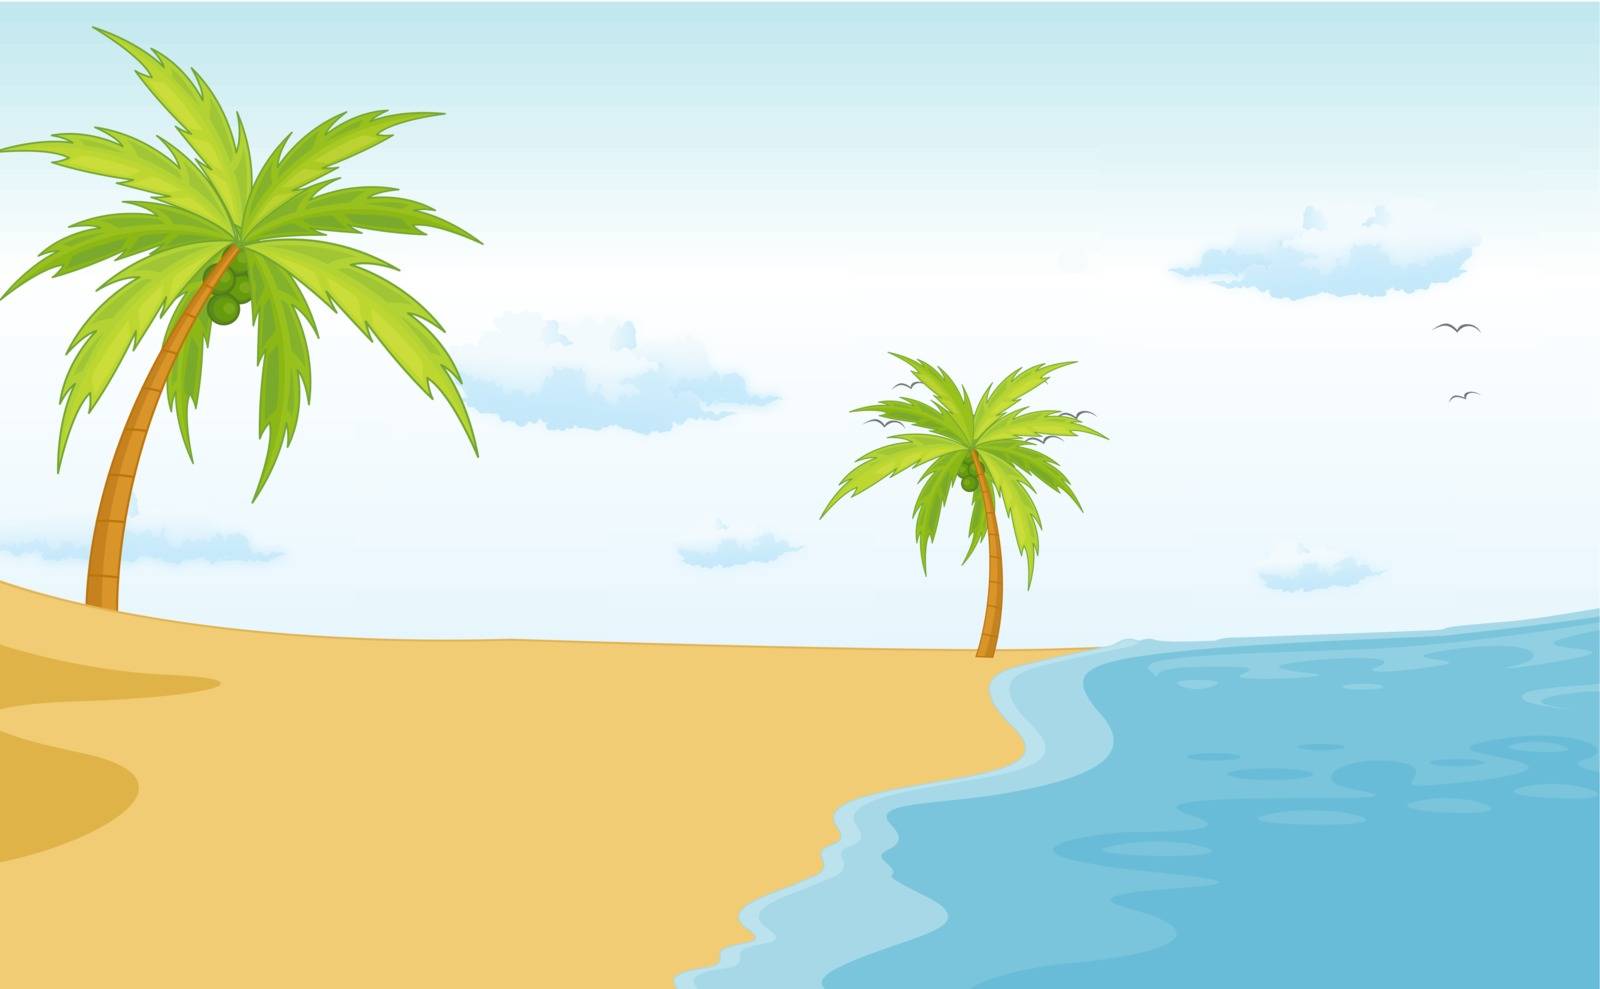 Illustration of a beach paradise